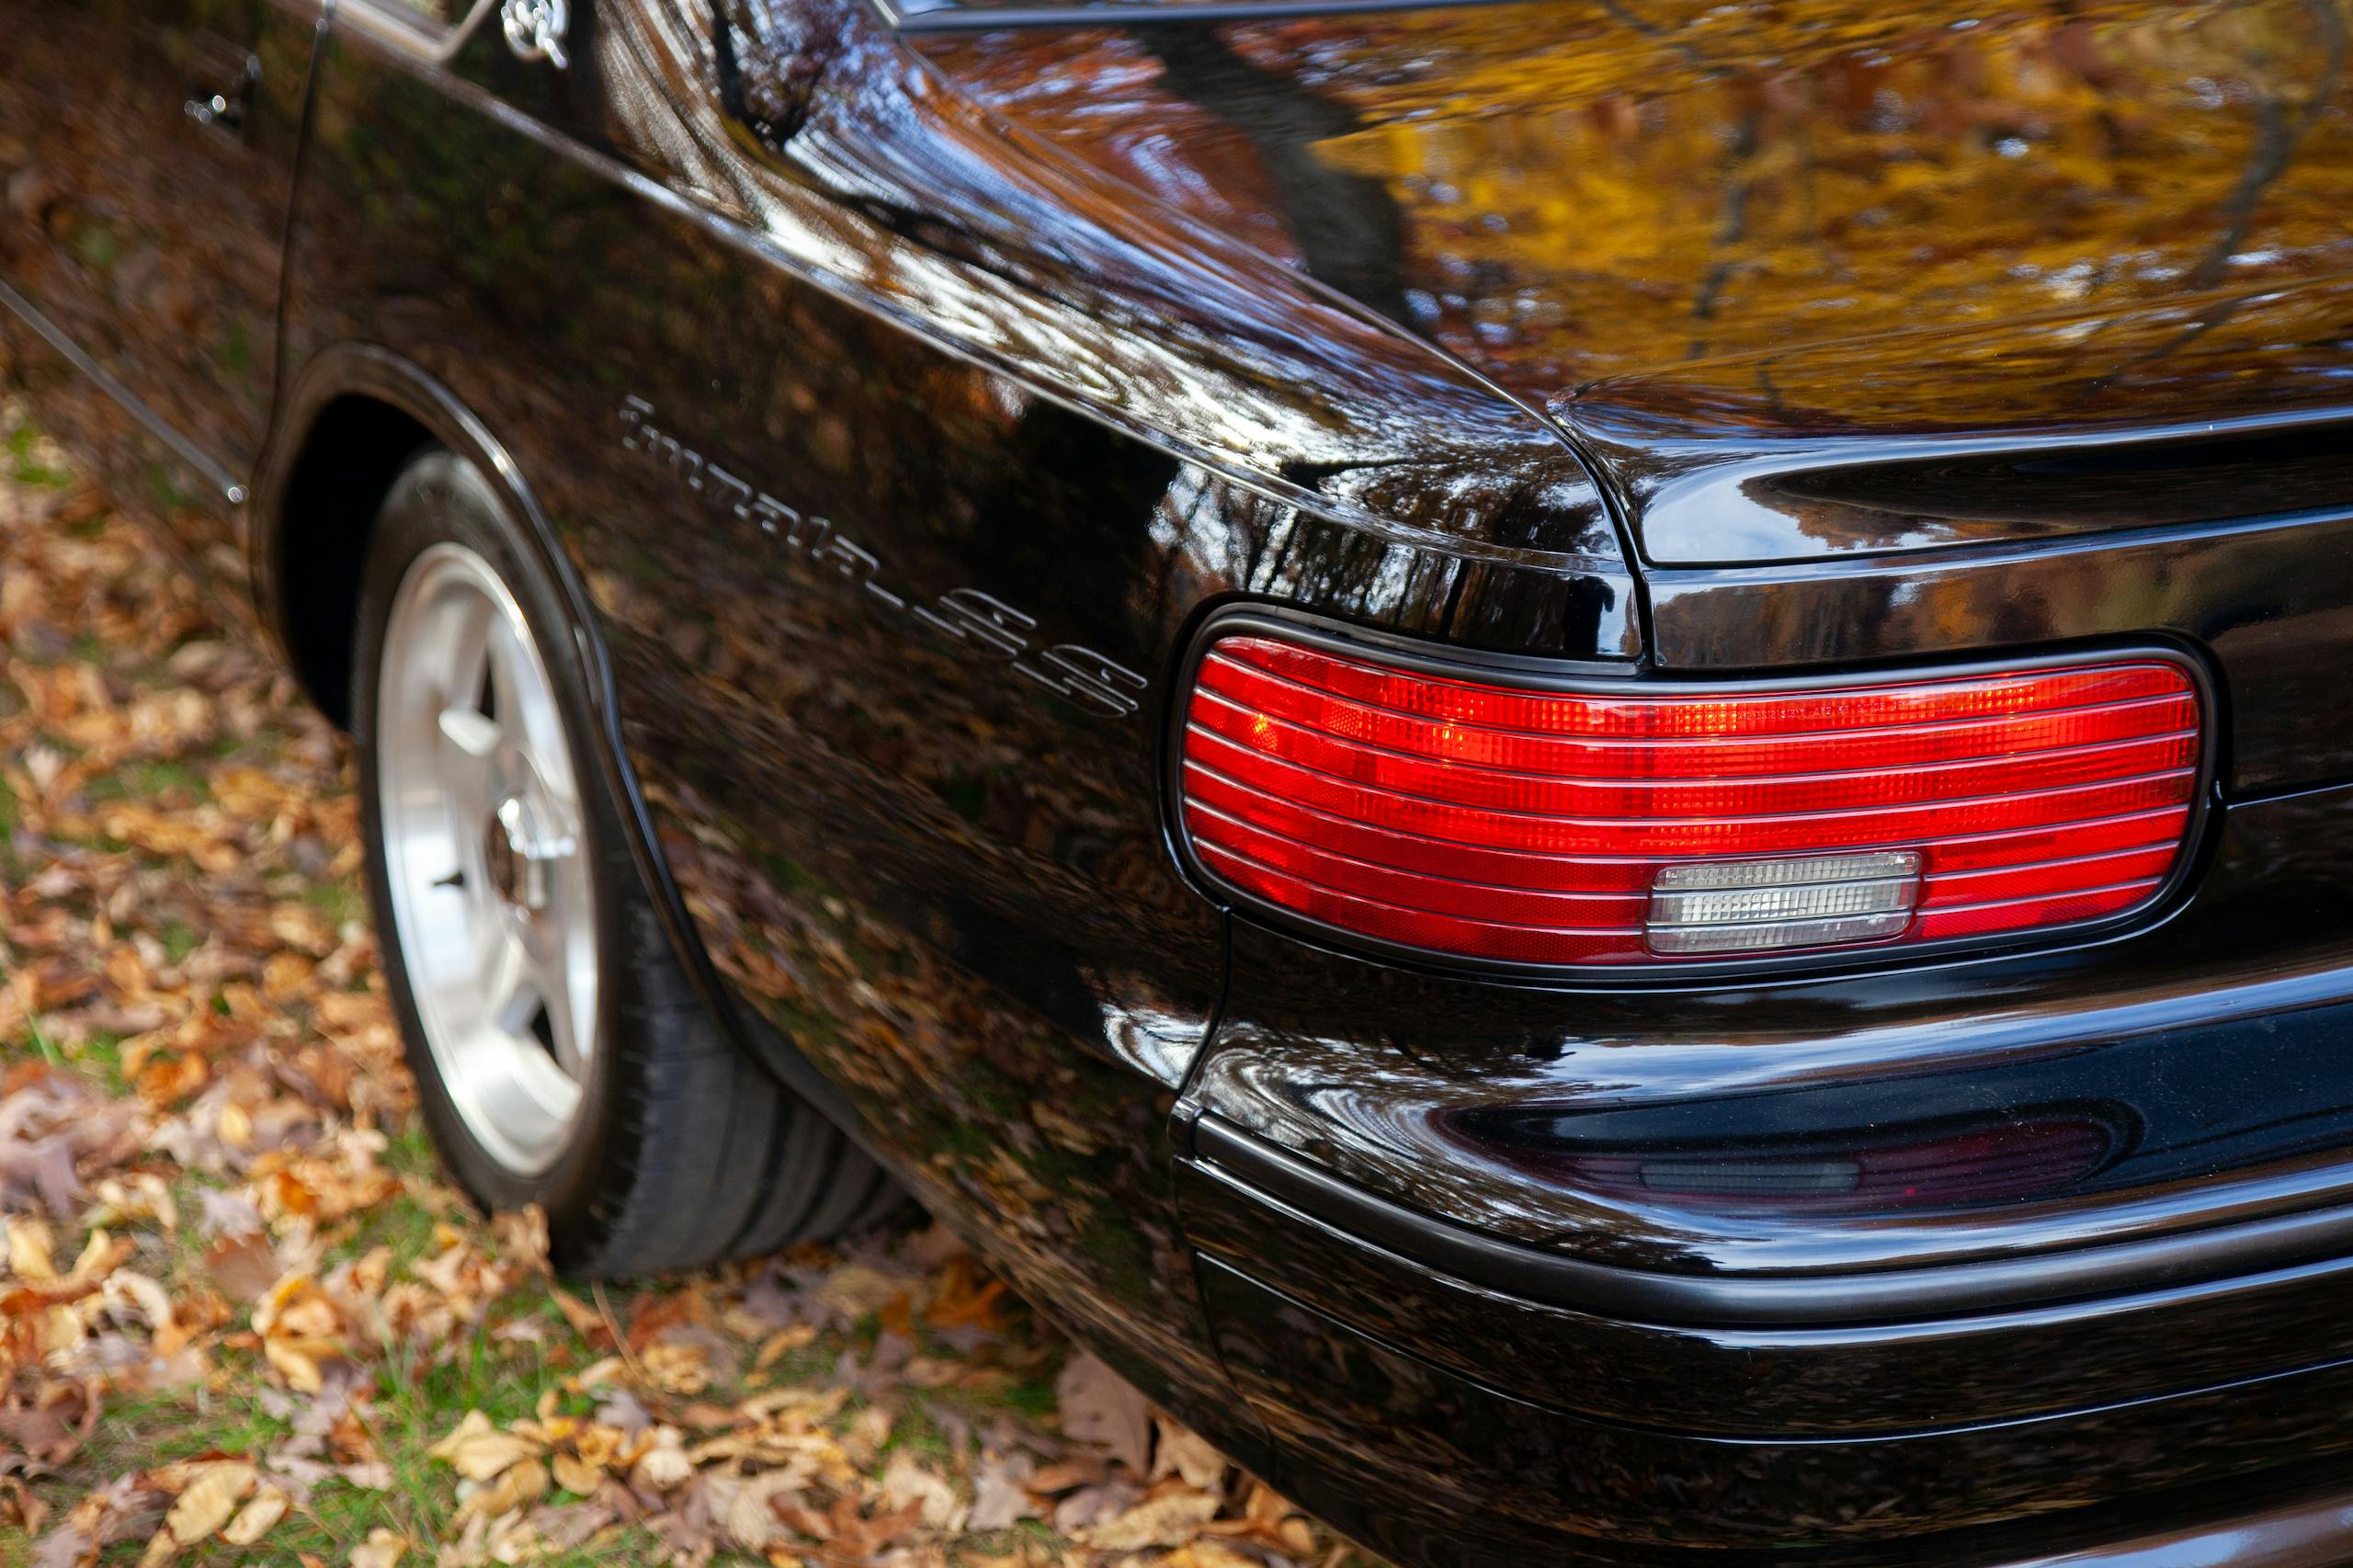 1996 Chevrolet Impala SS taillight badging